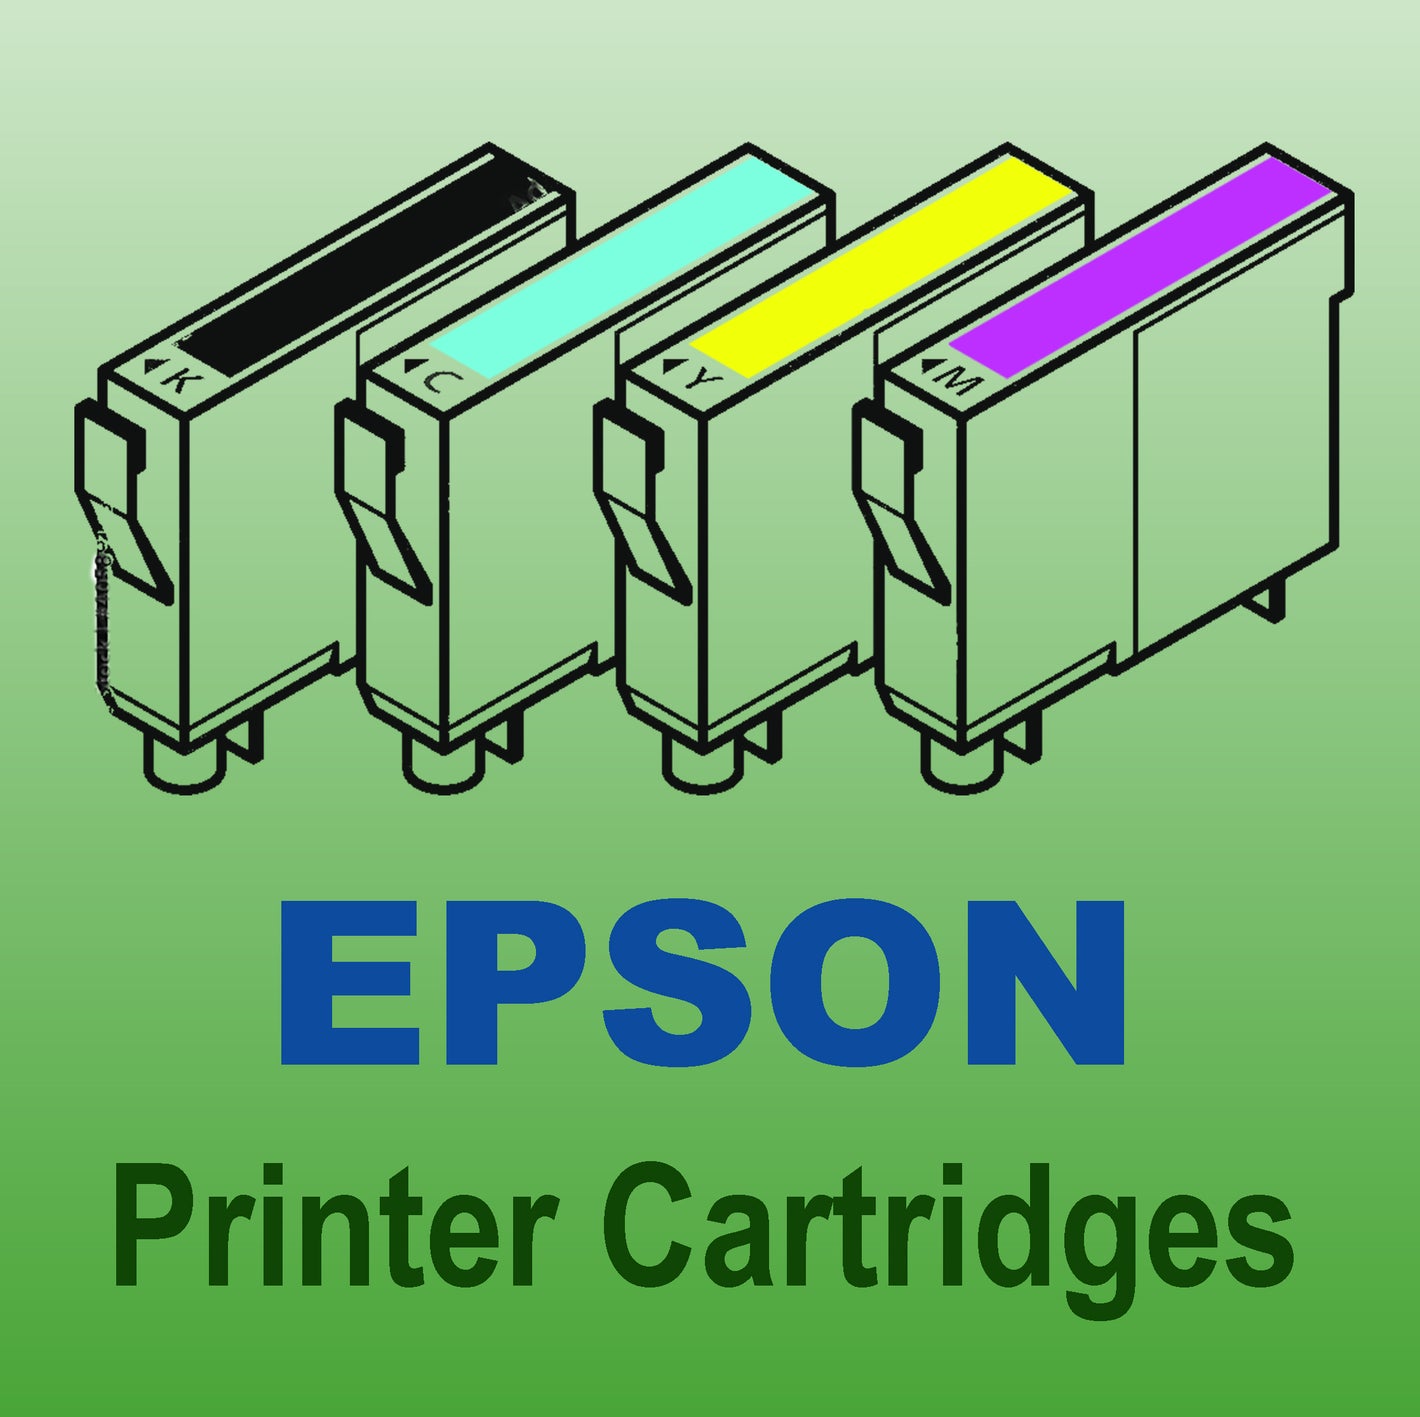 Epson Printer Cartridges